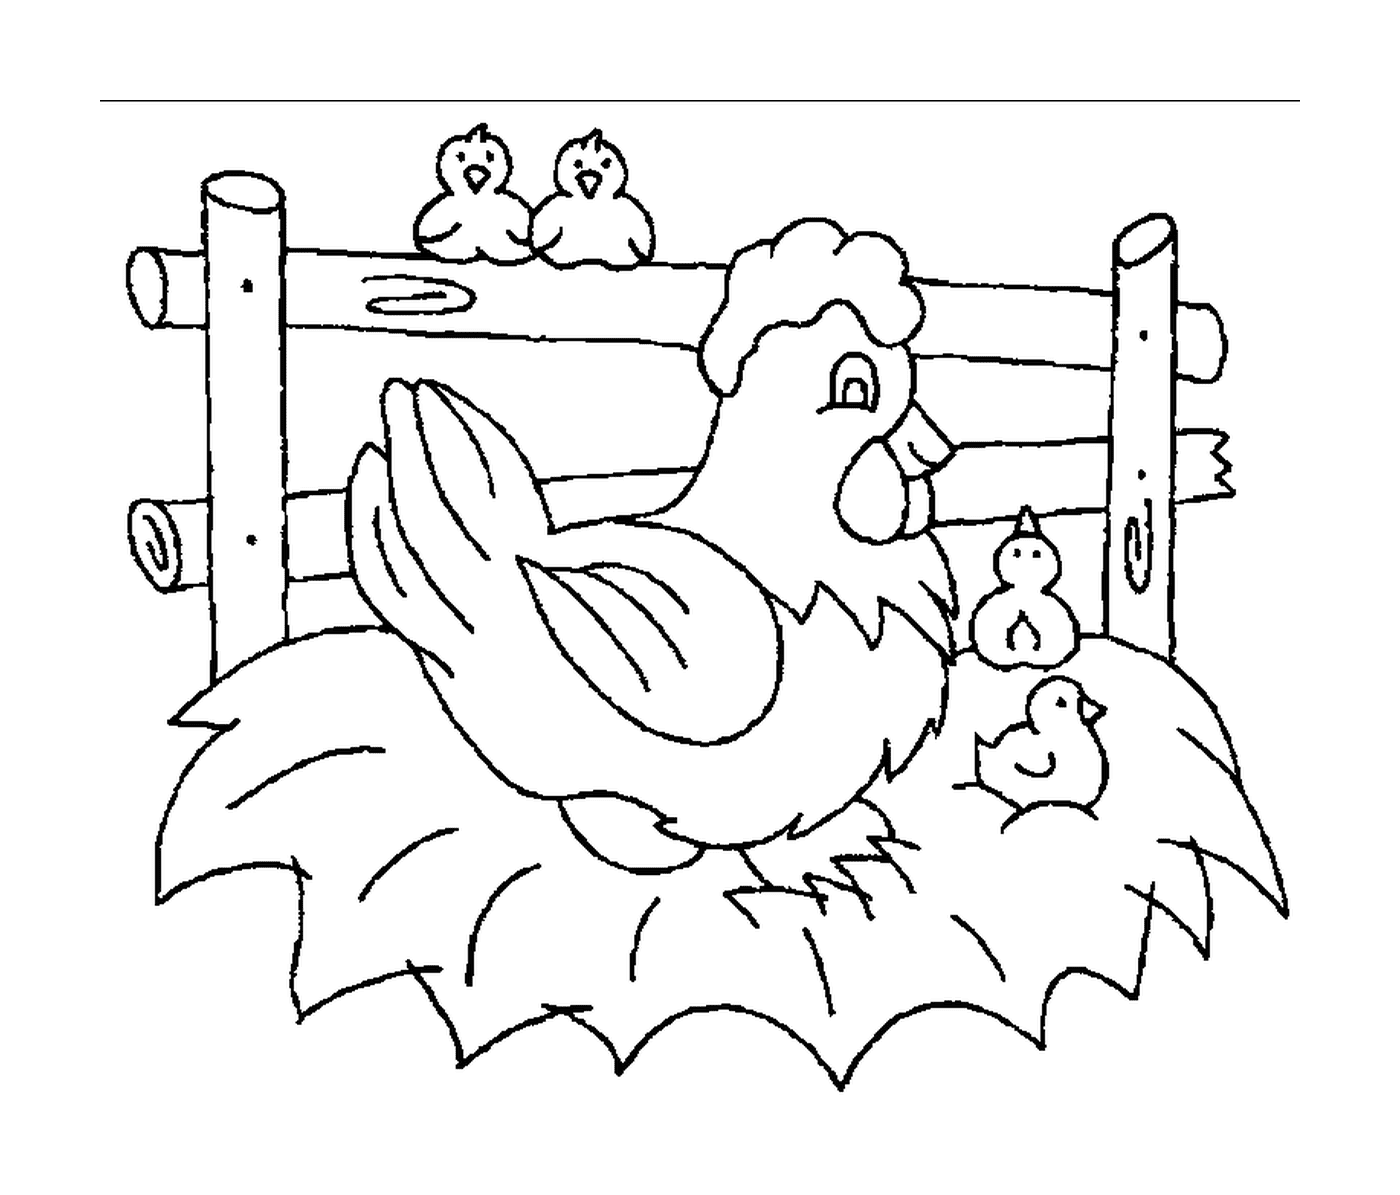  Chicken and three chicks 